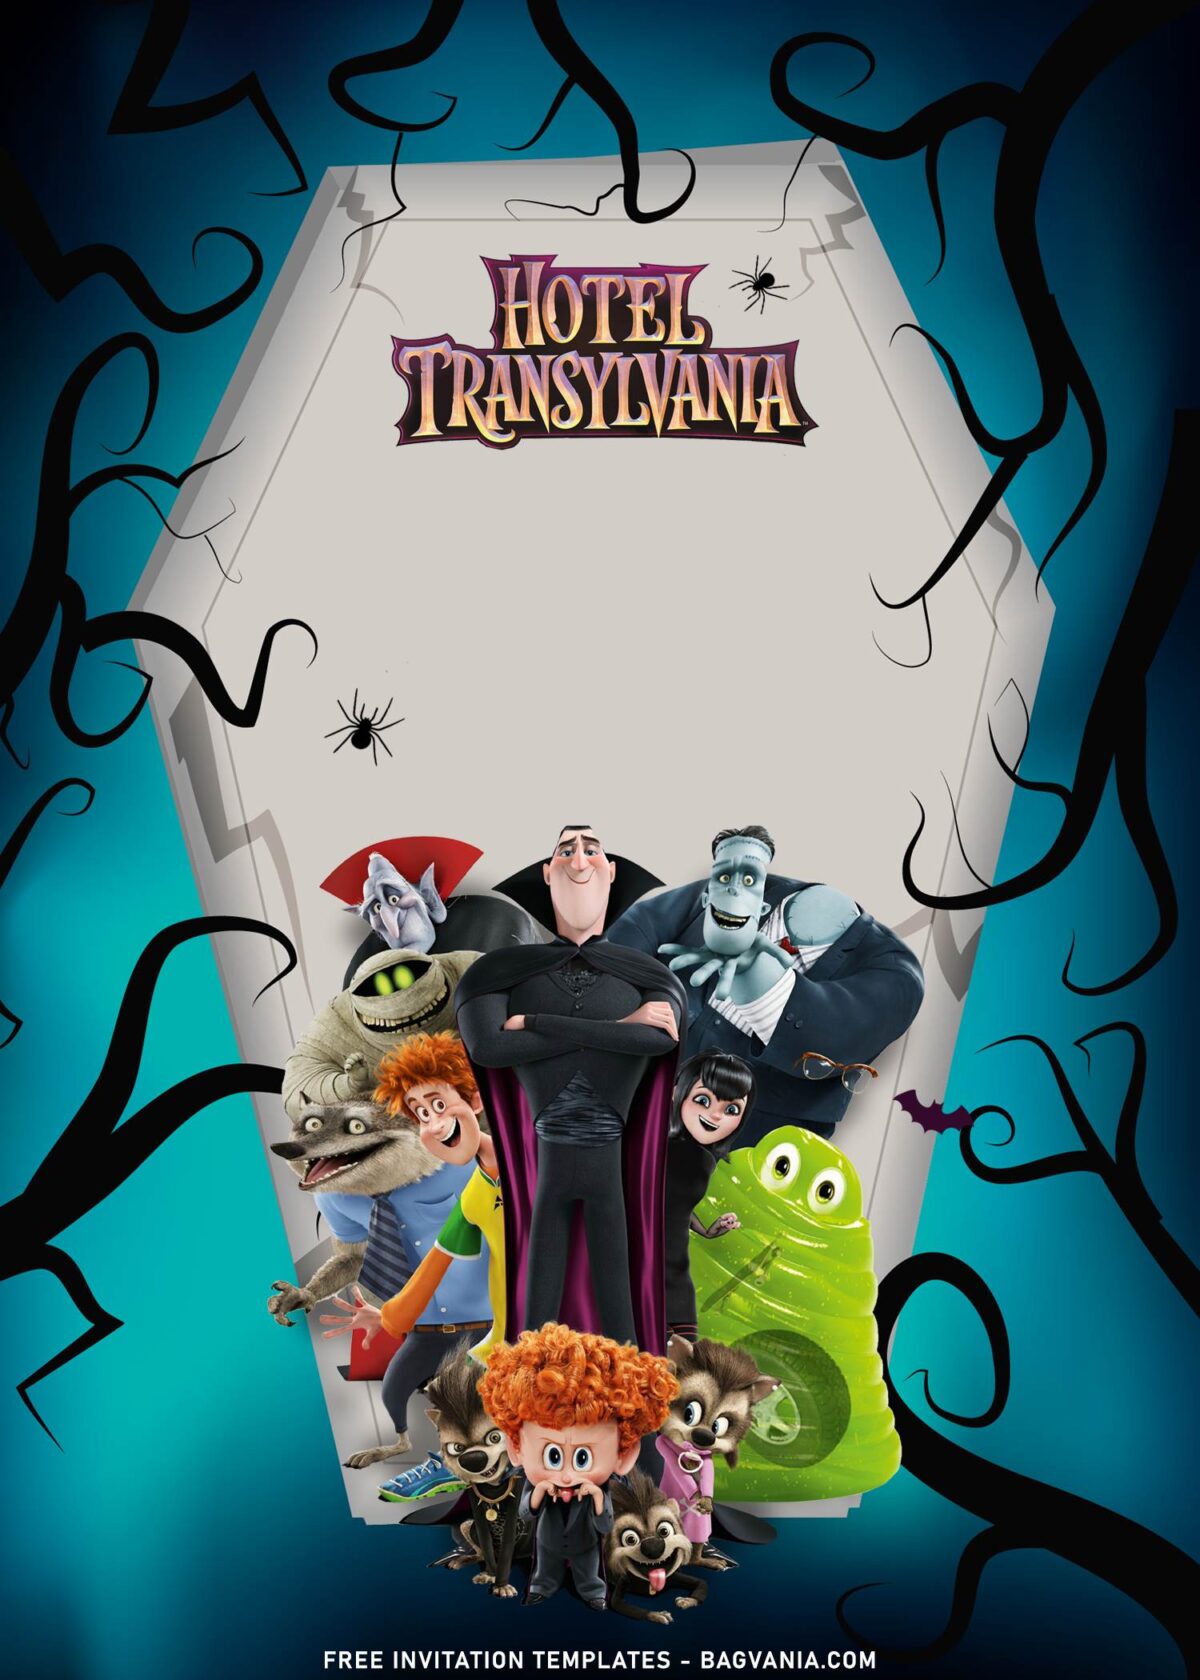 10+ Hotel Transylvania Birthday Invitation Templates with Spooky theme